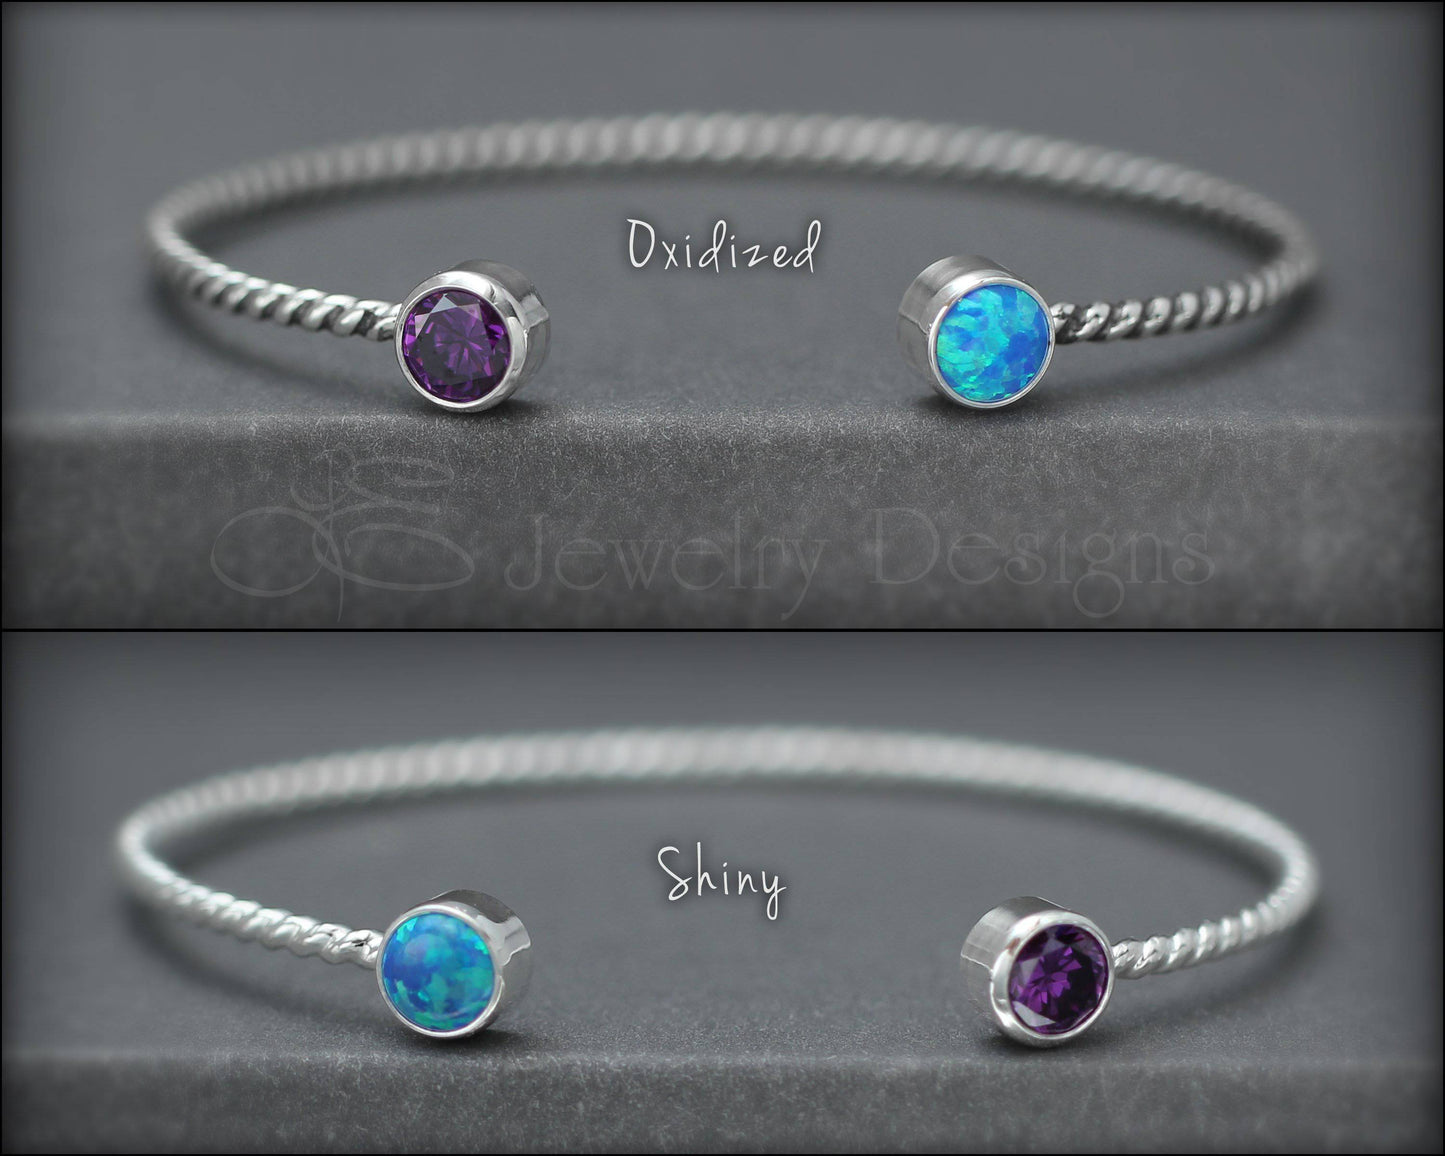 Dual Birthstone or Opal Bracelet - LE Jewelry Designs